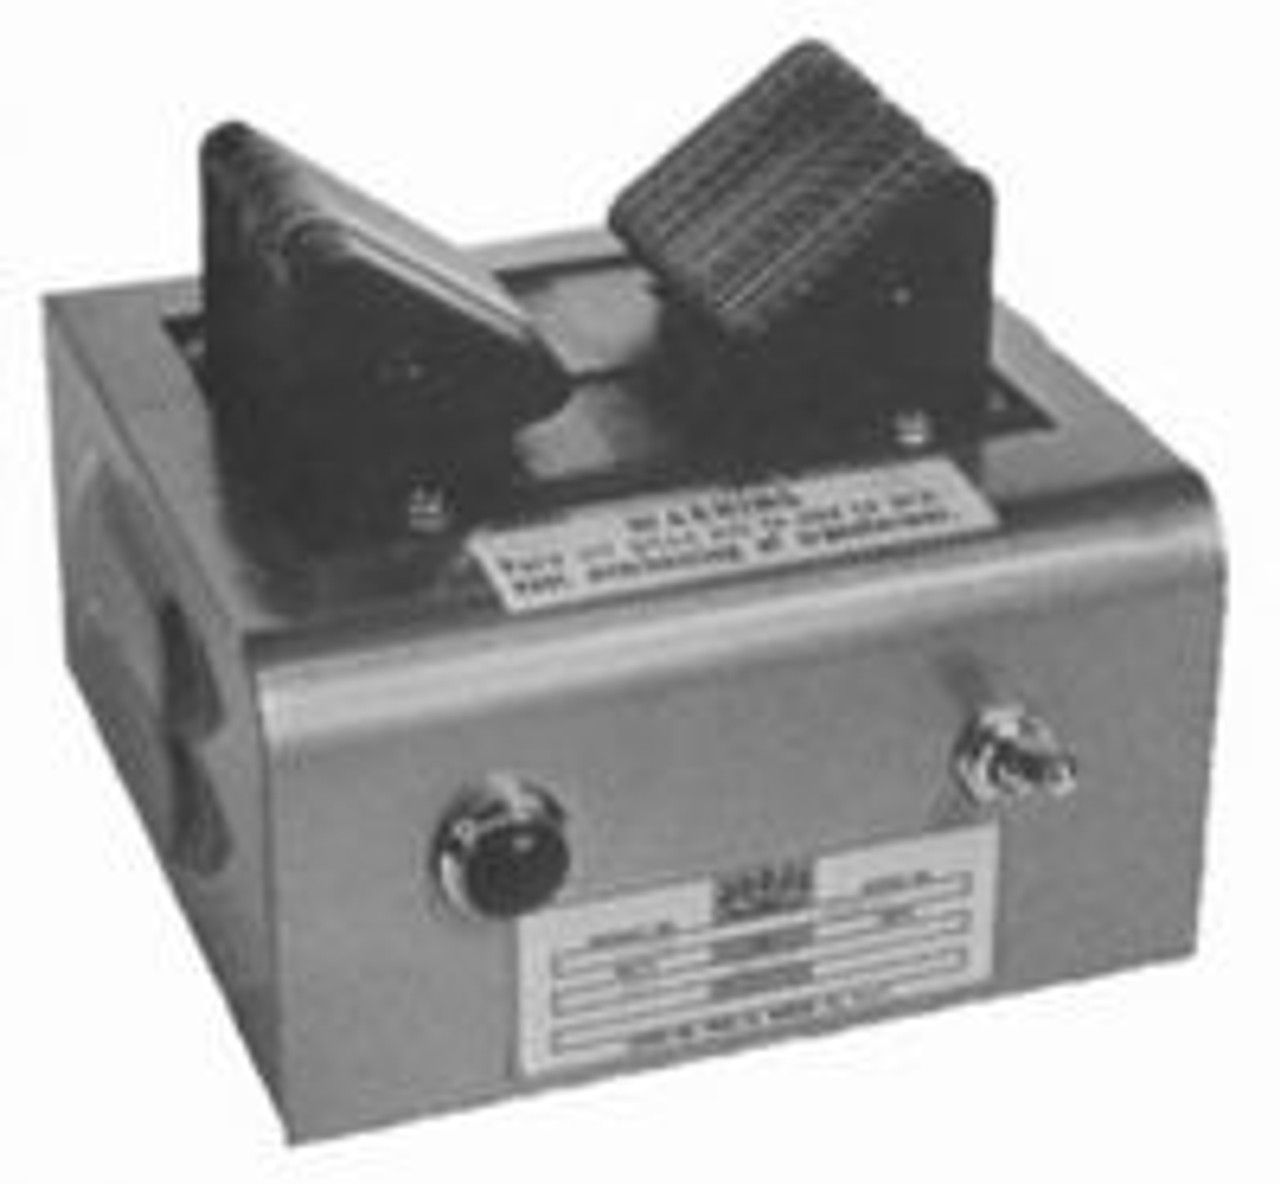 Armature tester, Industrial Growler C351-2506, 230 Volt, 50/60 Hz